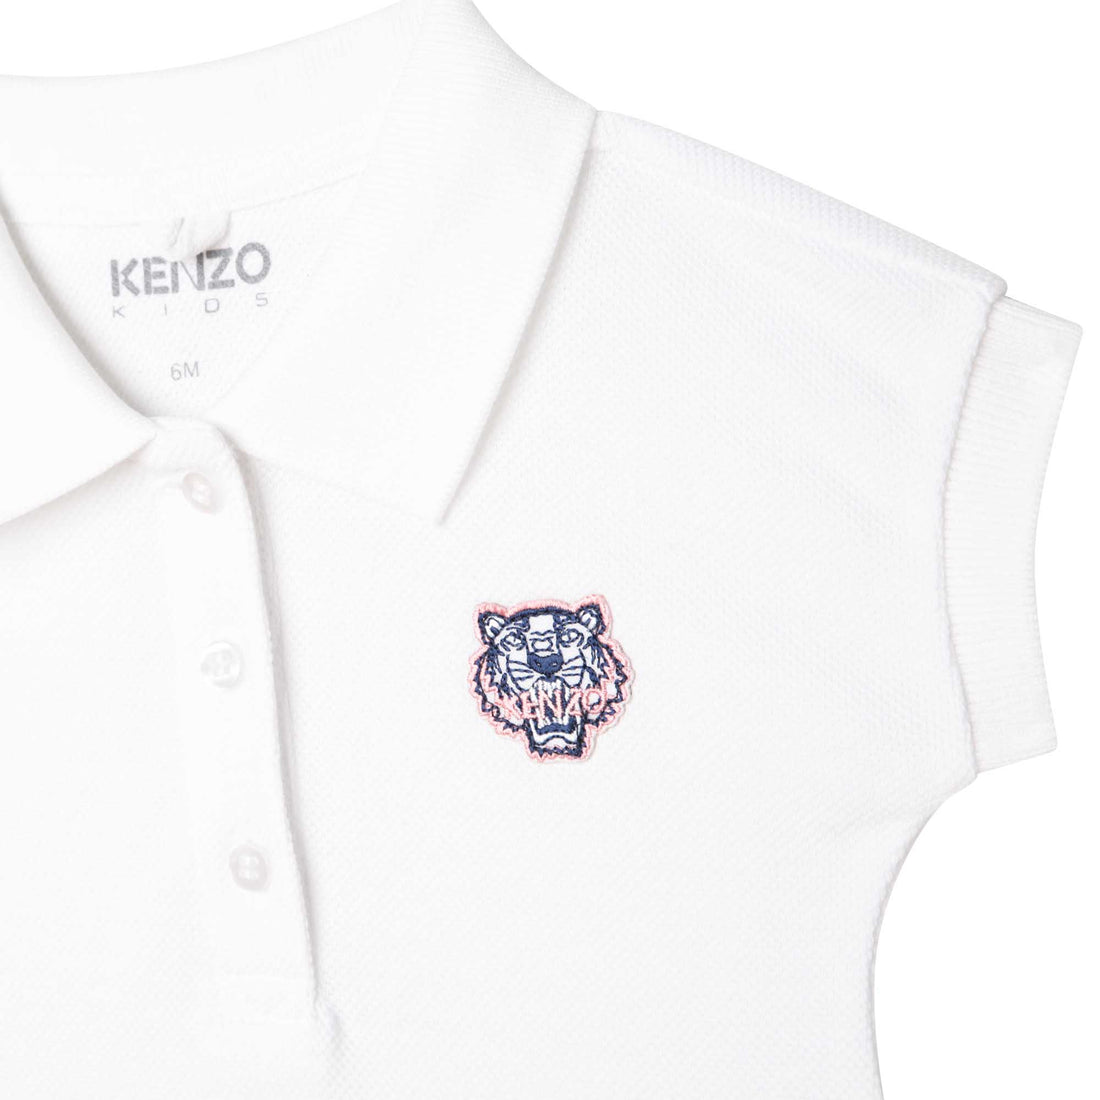 Kenzo Polo Dress Style: K92033